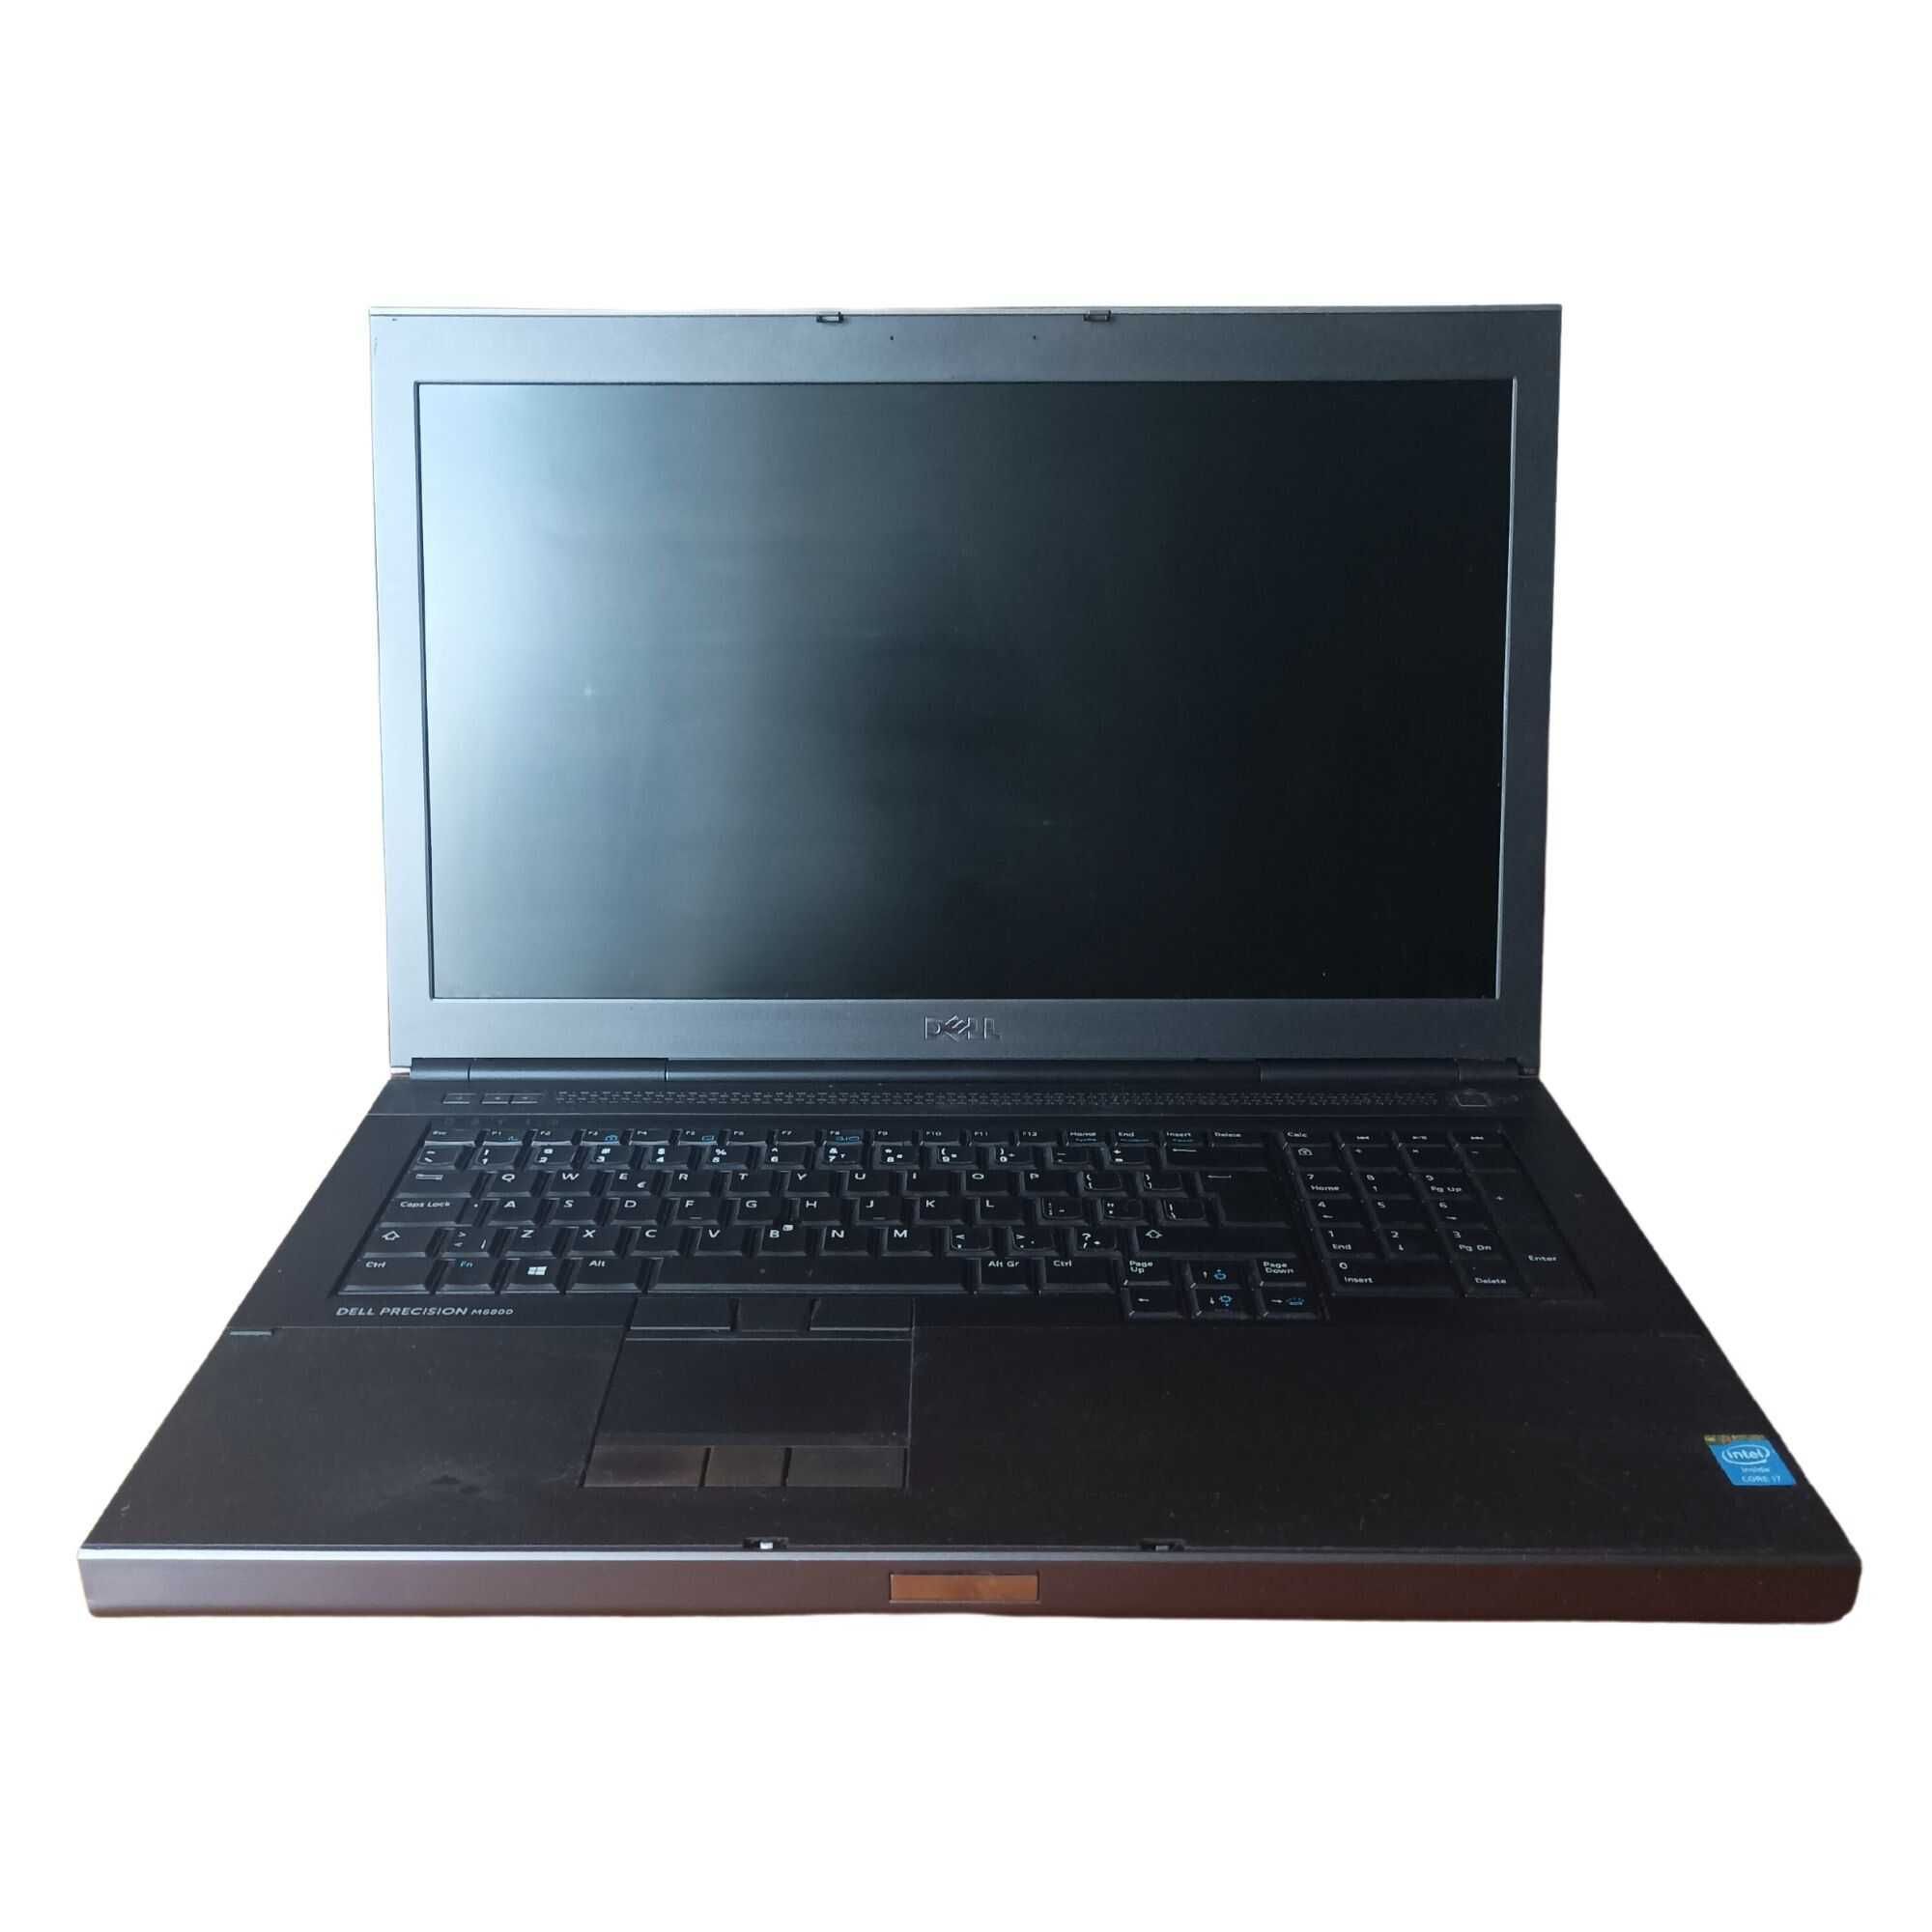 Laptop Dell Precision M6800 i7 | 16GB | 128GB SSD | 512GB HDD